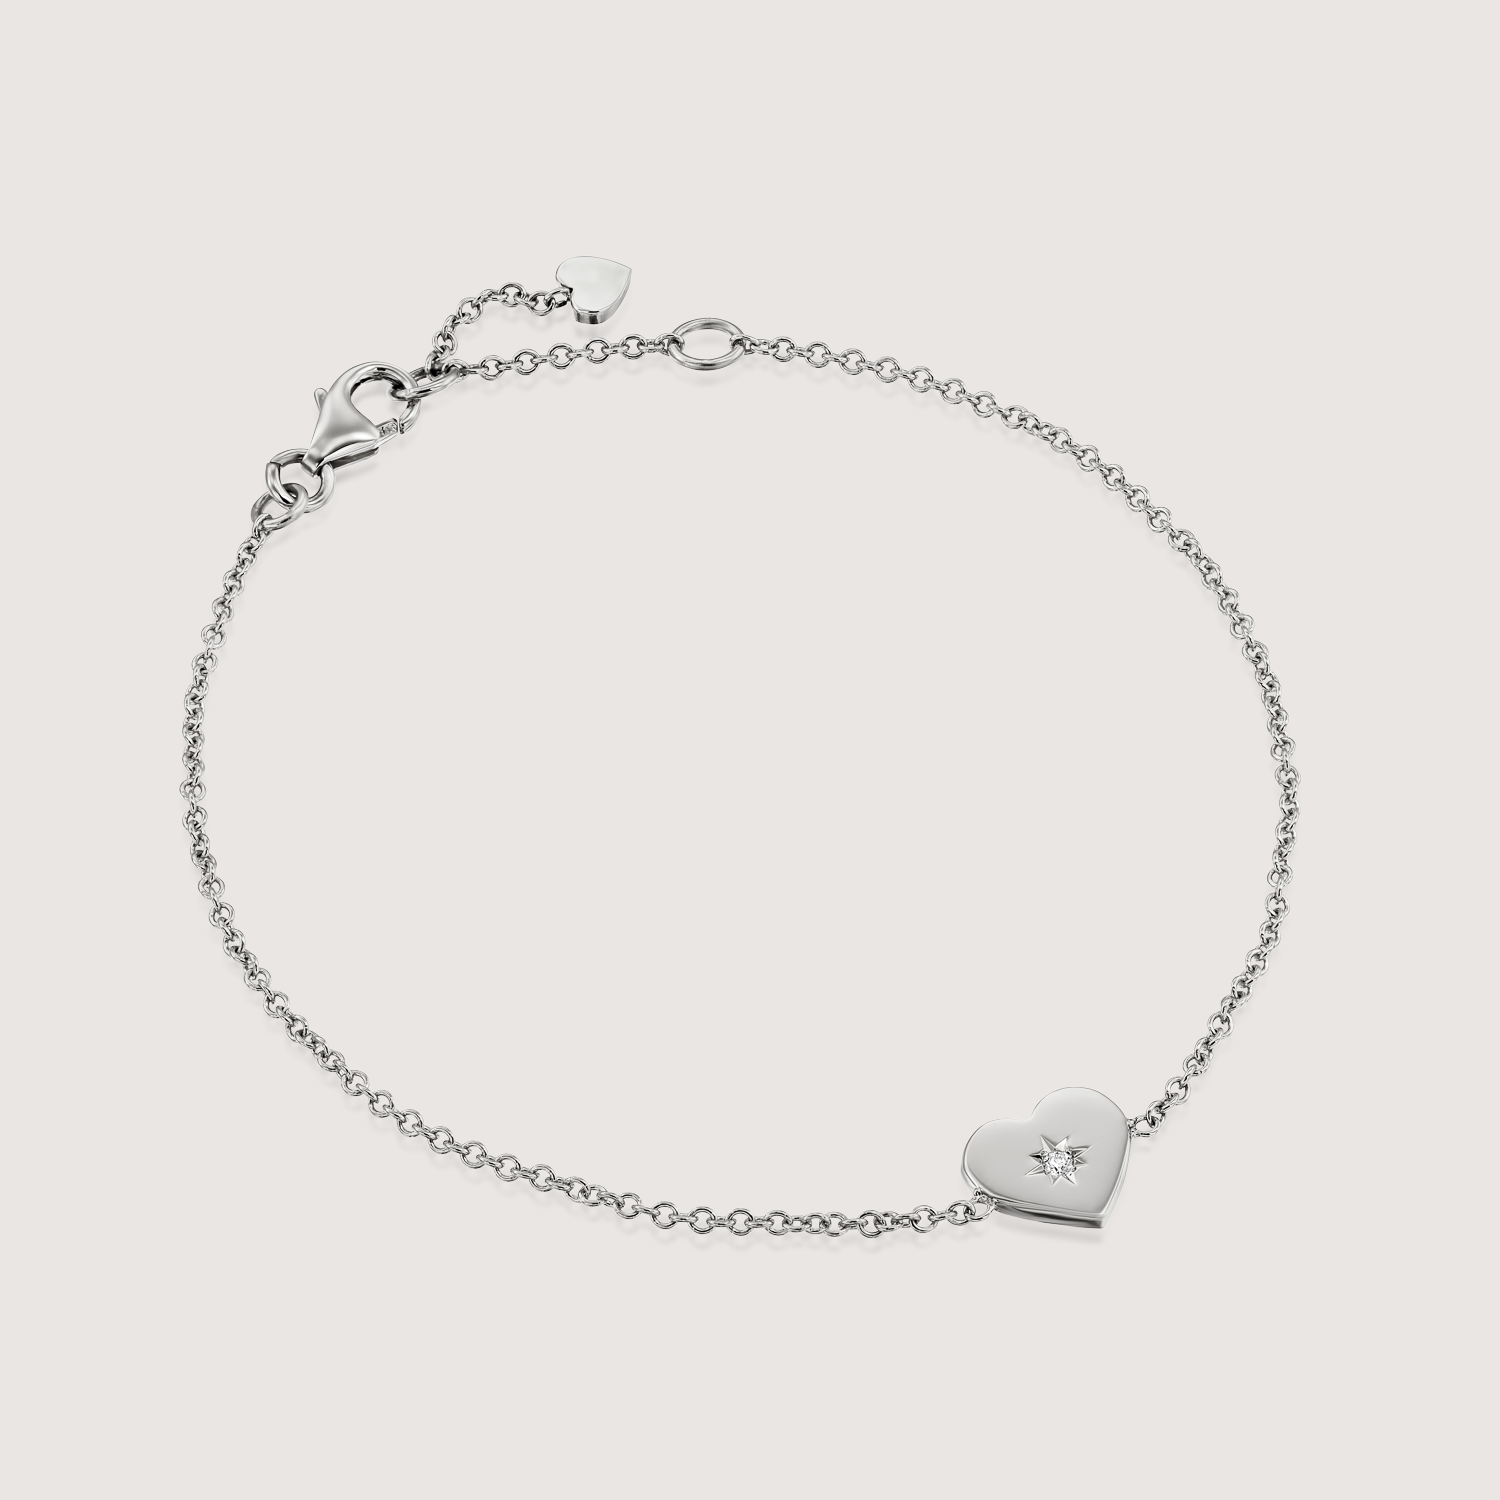 Heart Bracelet with stone